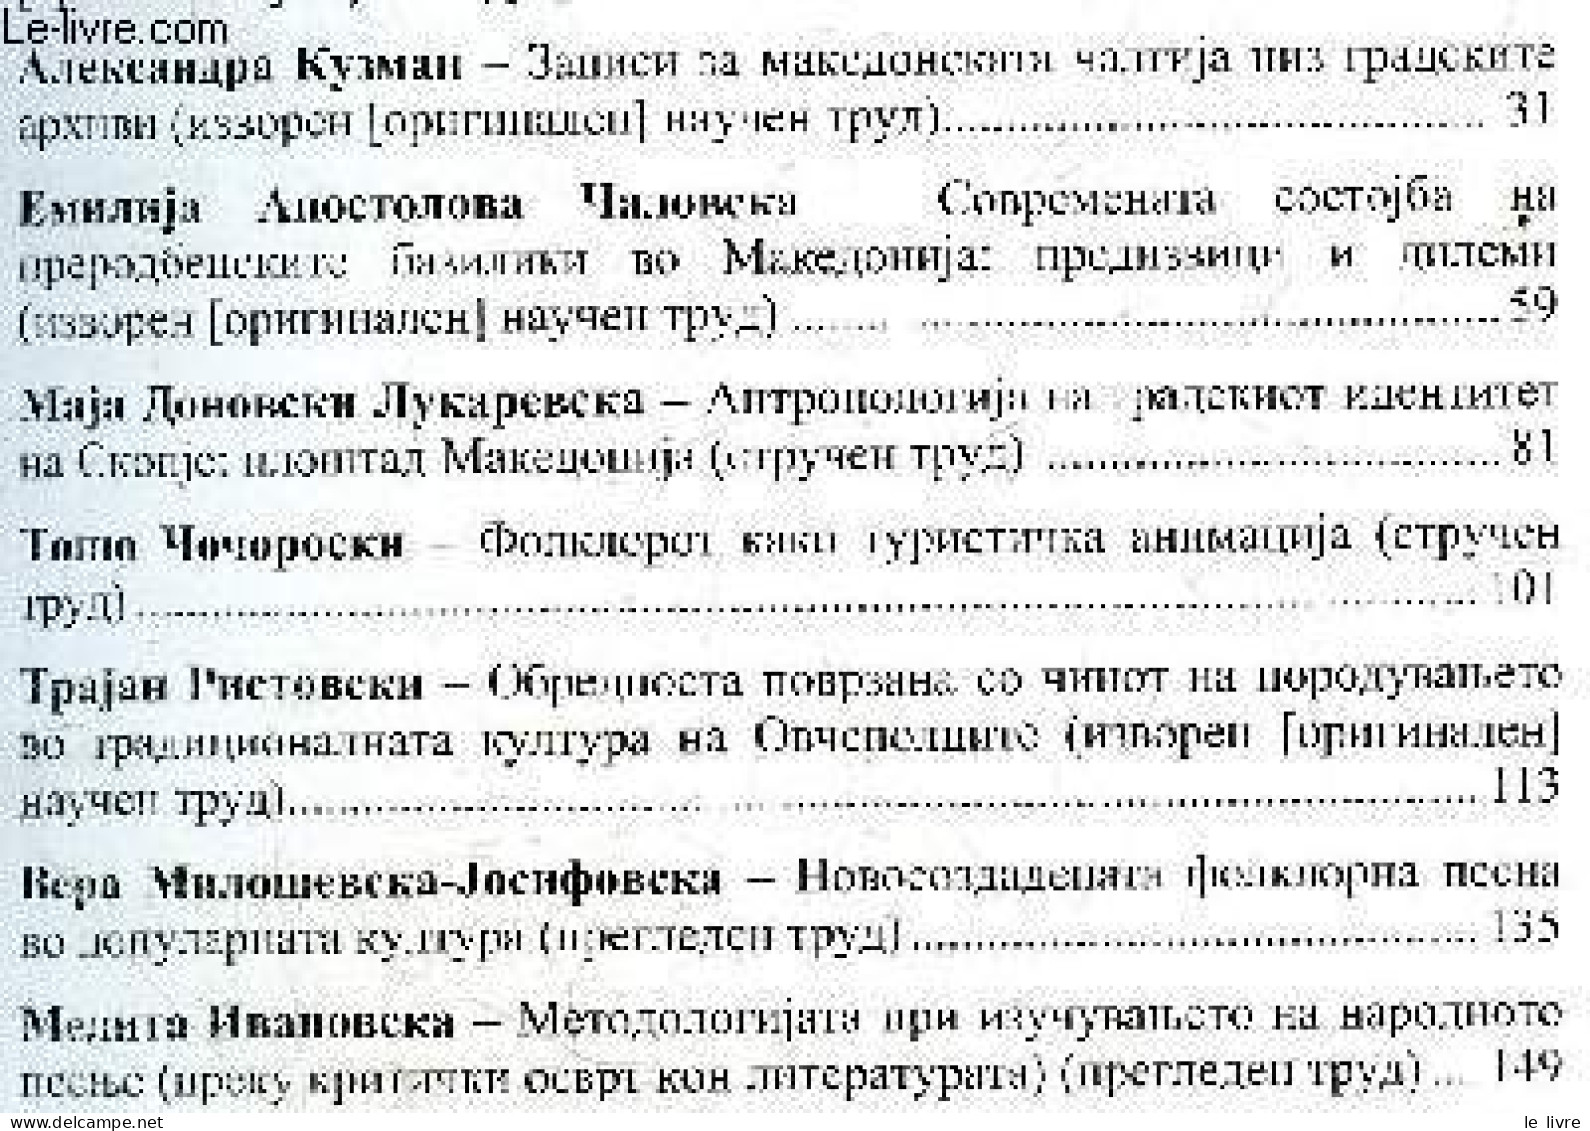 Makedonski Folklor - Godina LIII, Broj 82, Skopje, 2022 - UDC 398 / Folklore Macédonien - Volume 82, Annee LIII / Macedo - Cultural